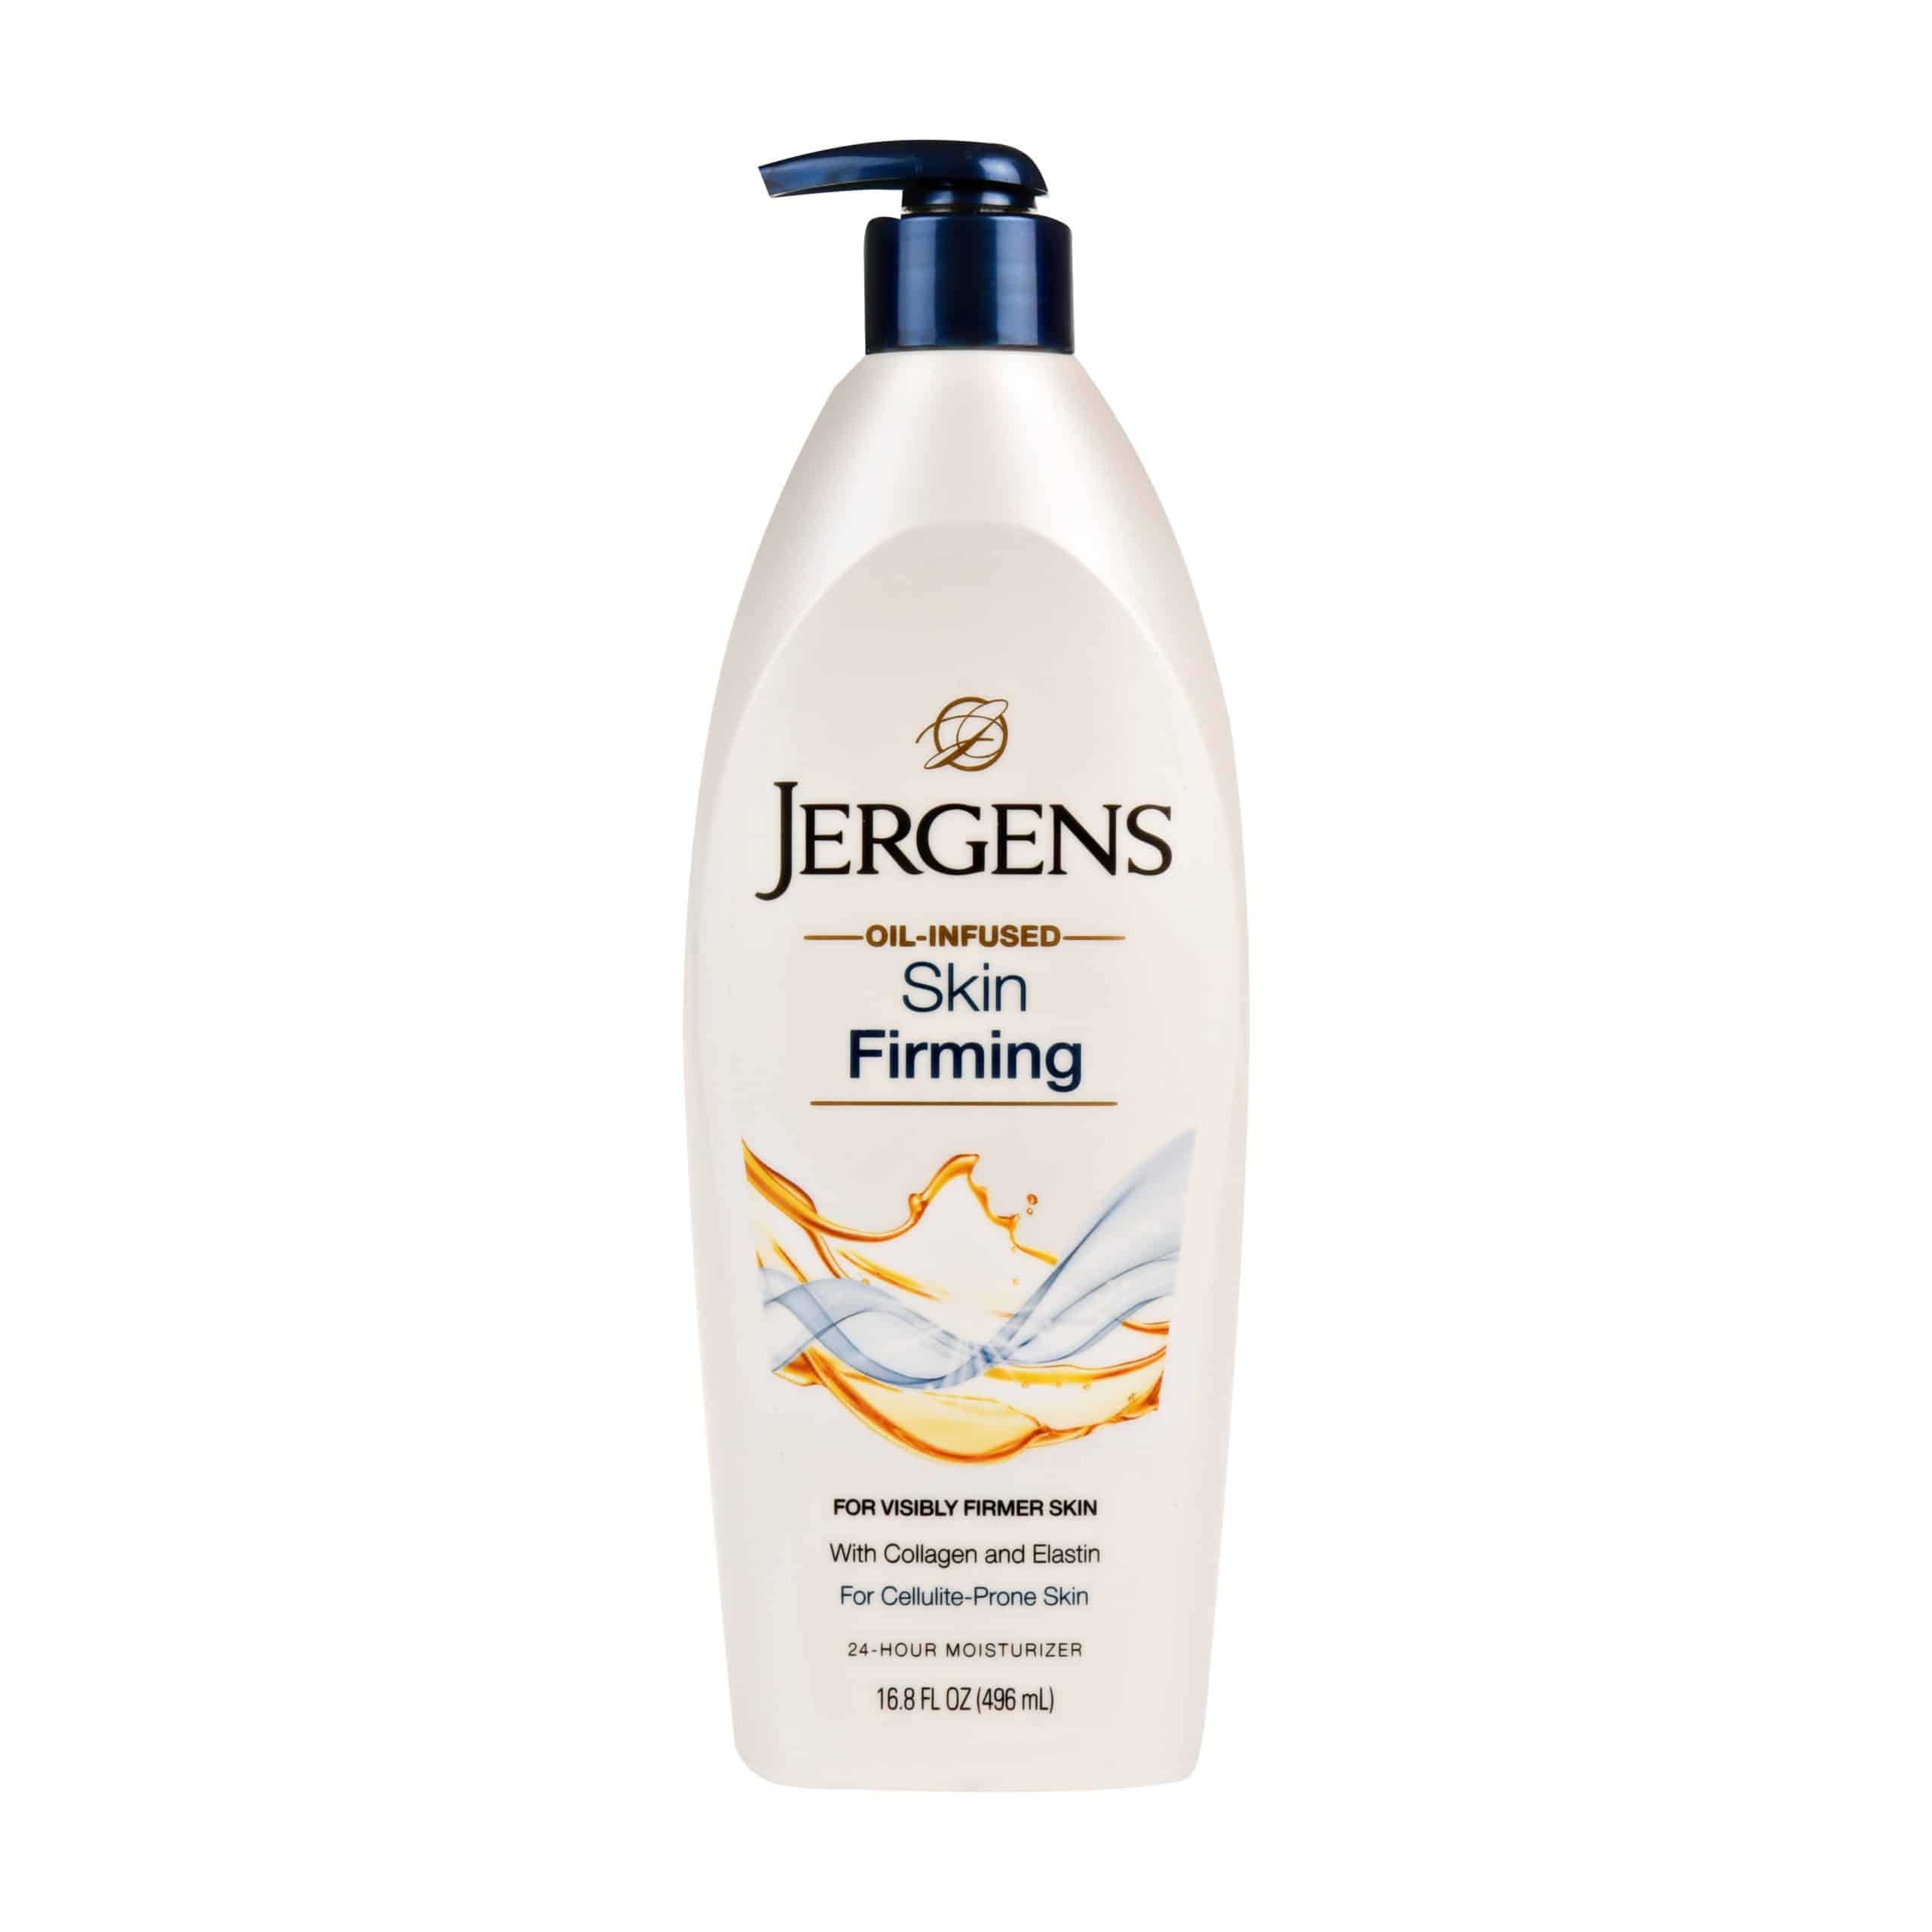 Jergens Skin Firming Moisturizing Lotion, 16.8 oz